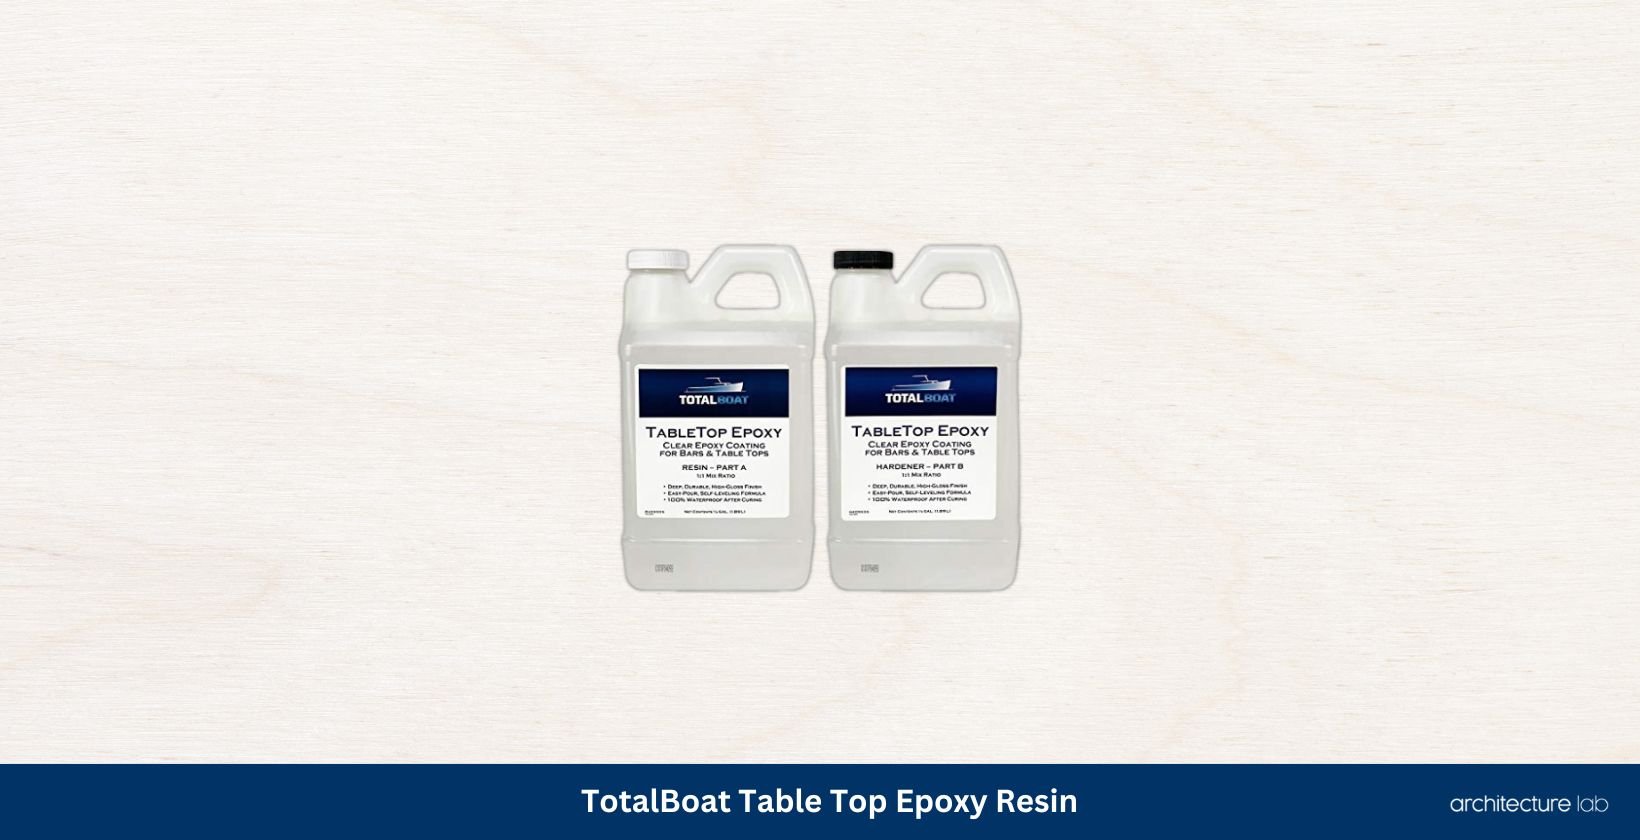 Totalboat table top epoxy resin